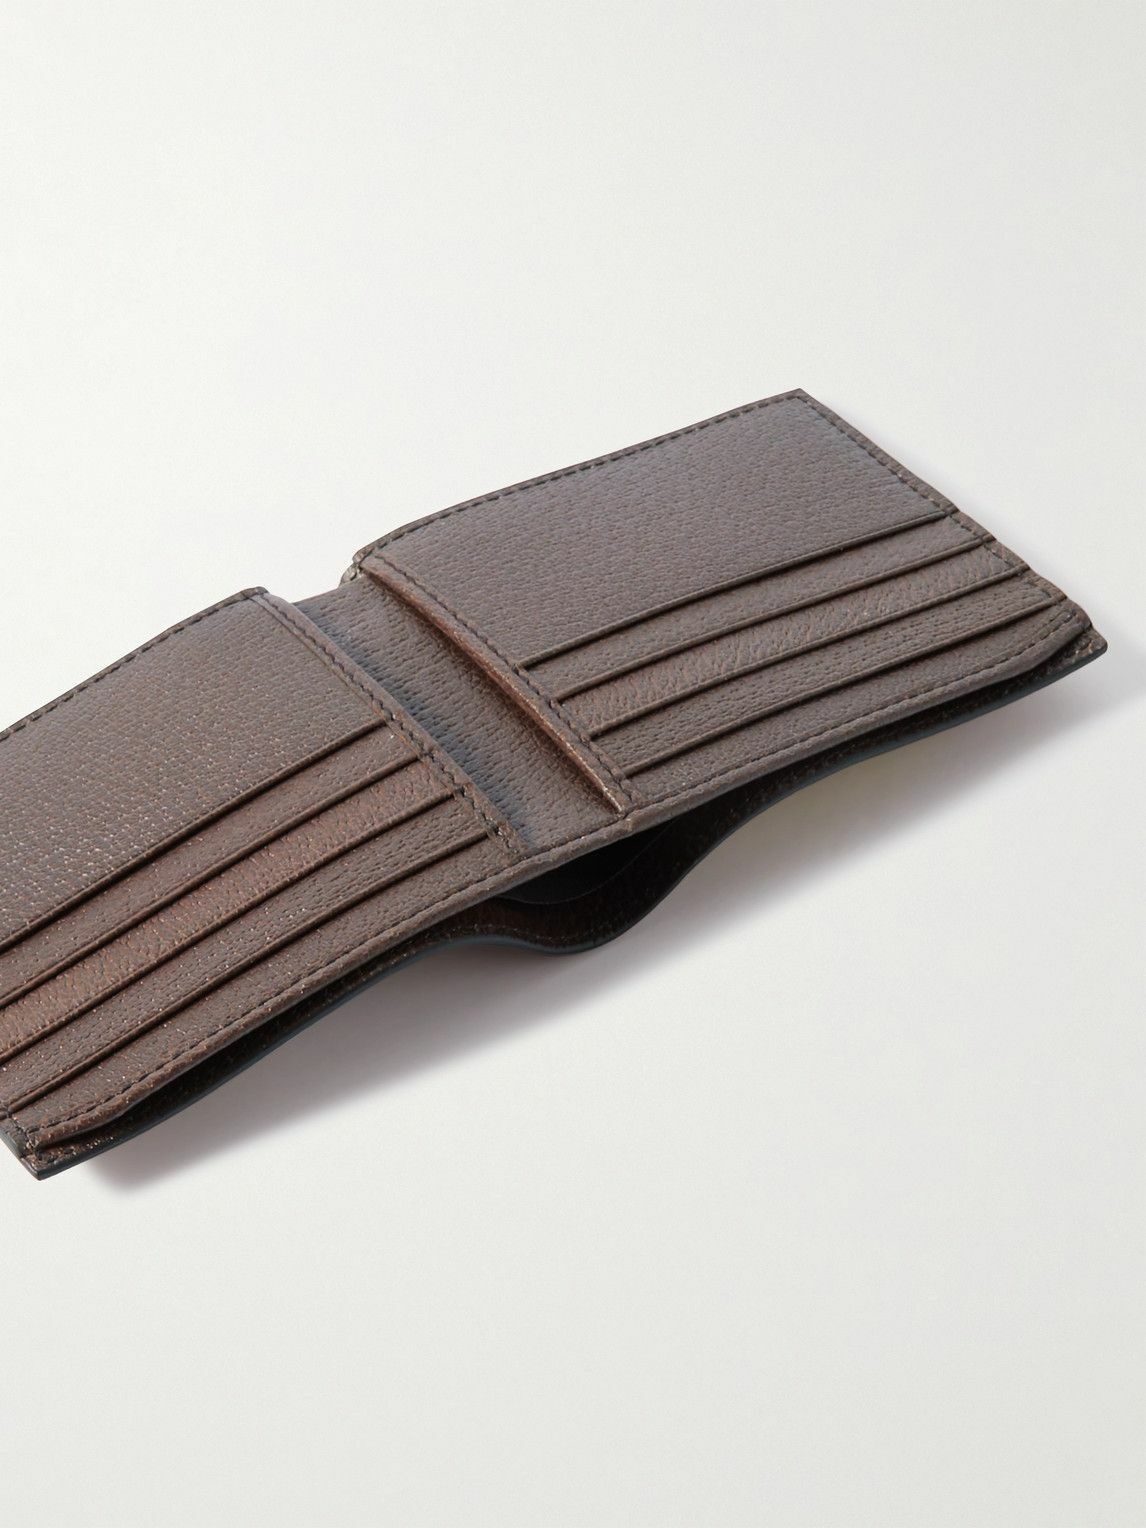 GUCCI Leather-Trimmed Monogrammed Coated-Canvas Cardholder for Men